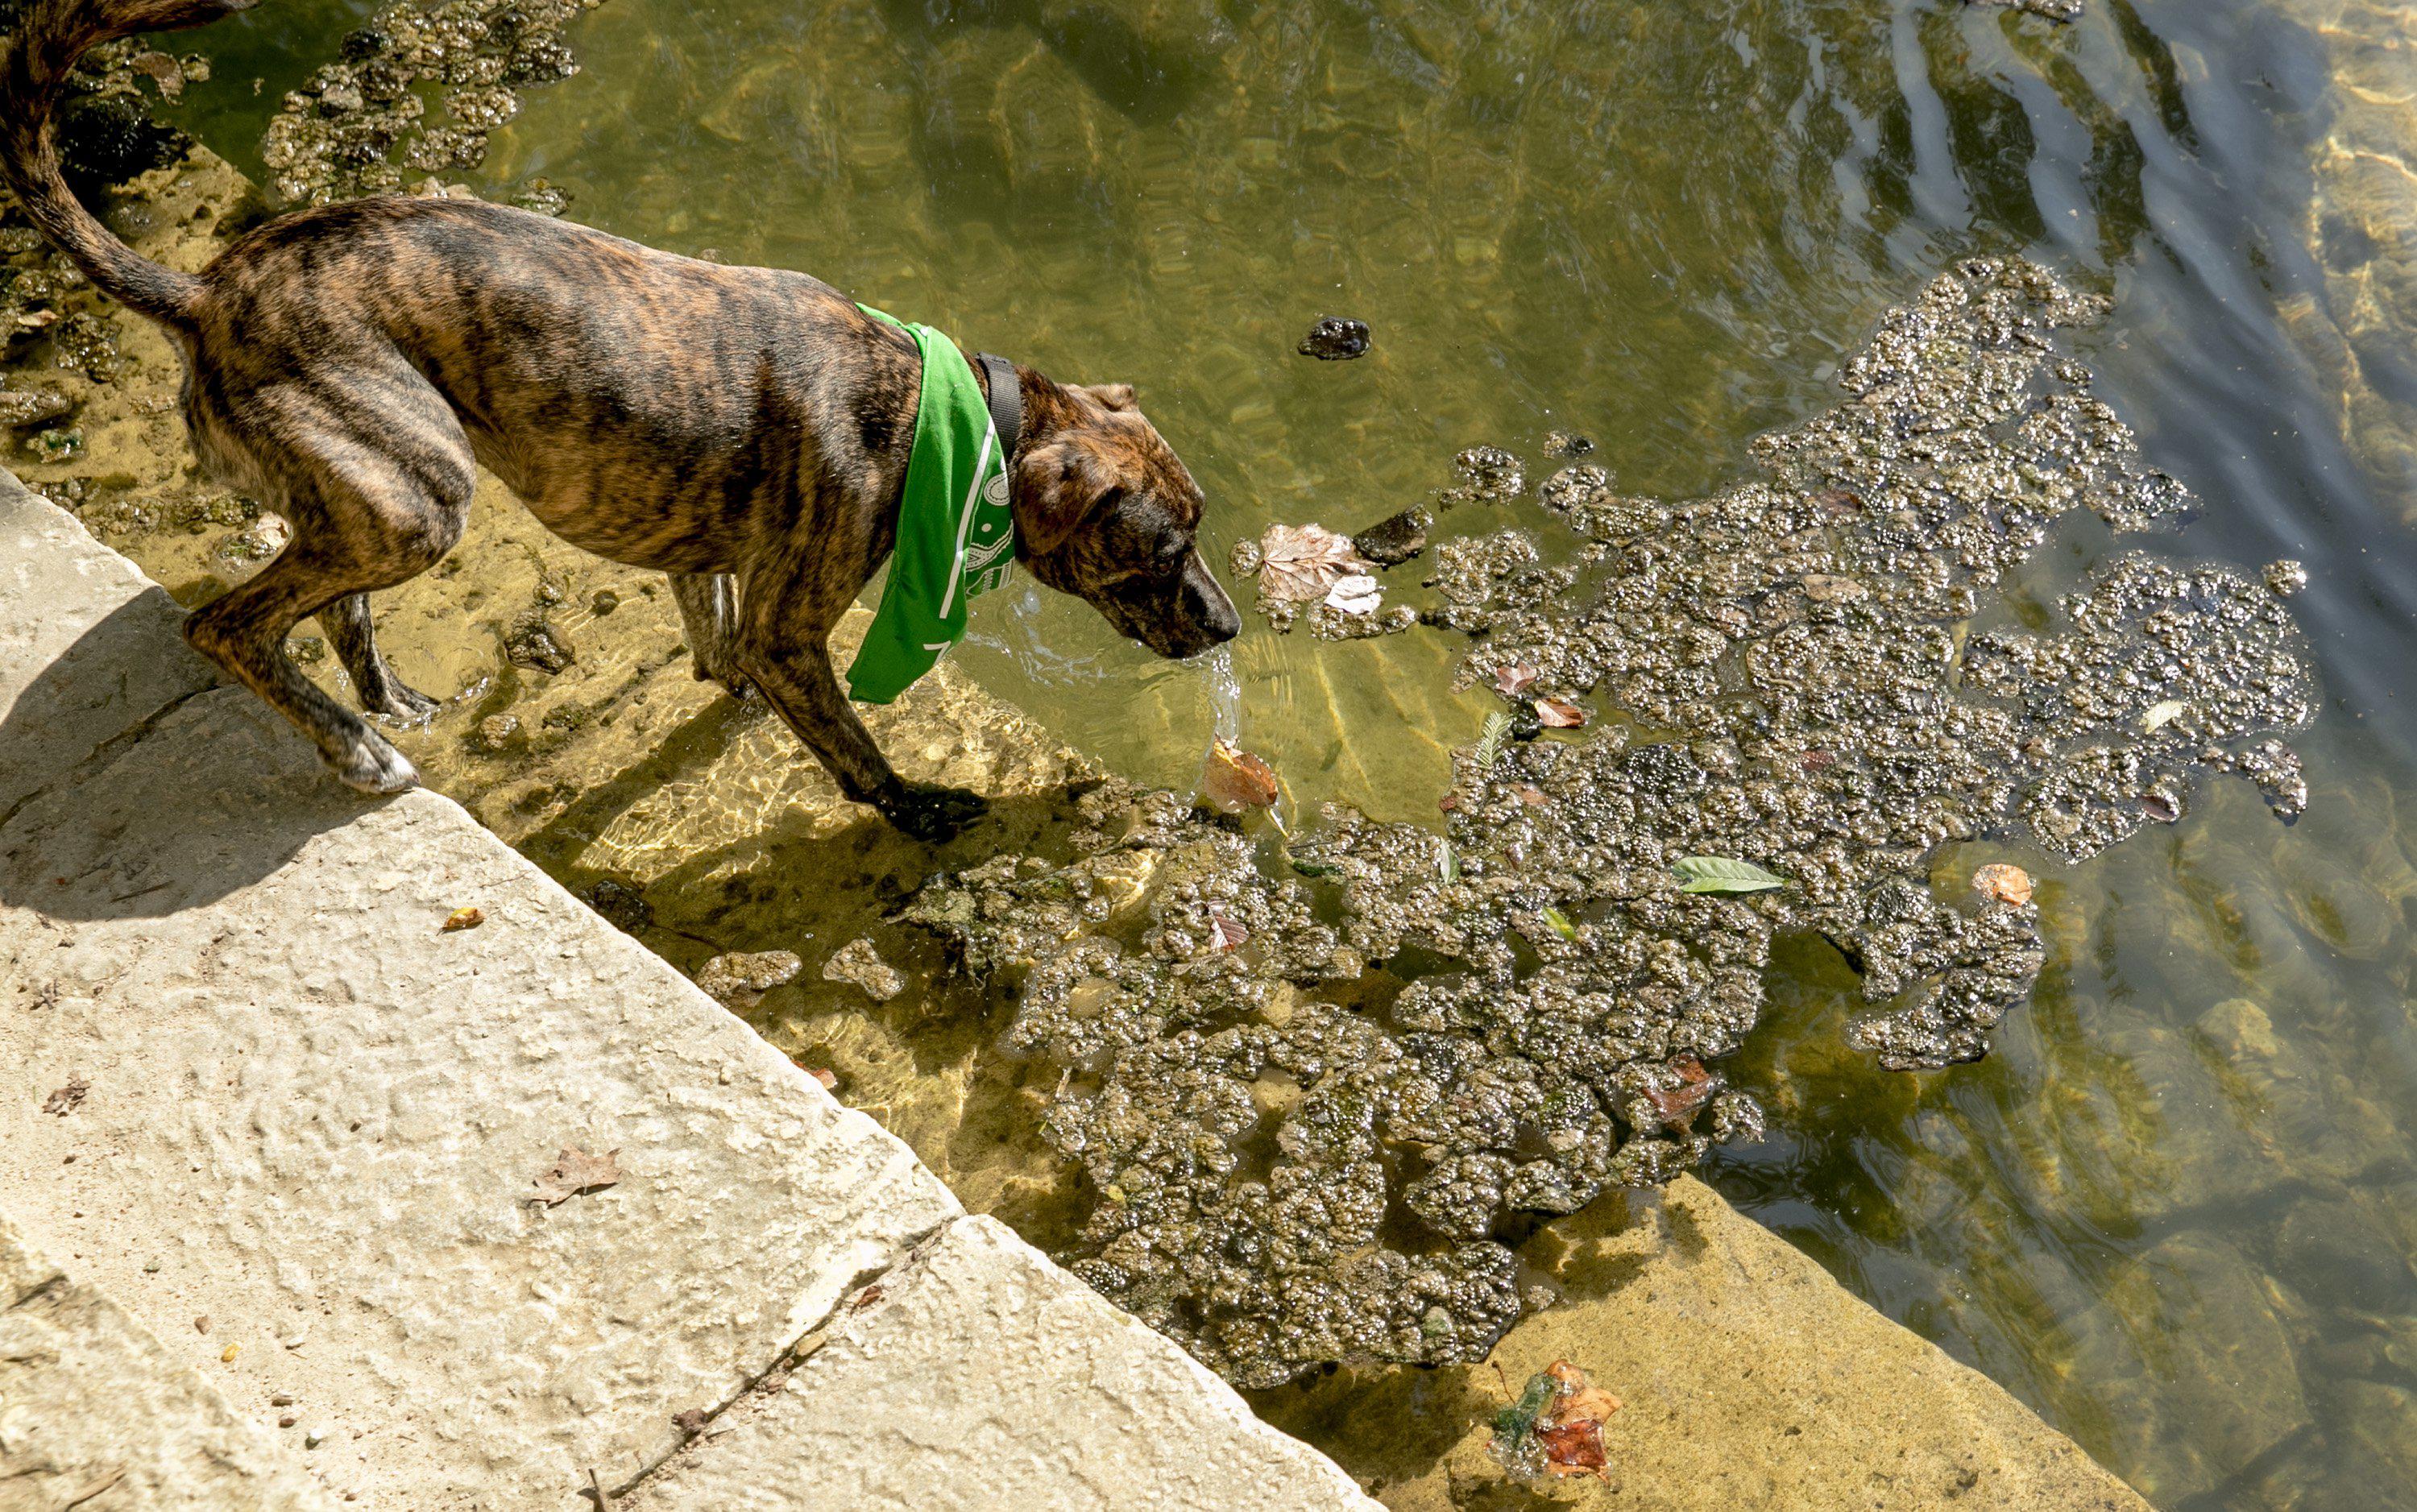 will algae water make dogs sick